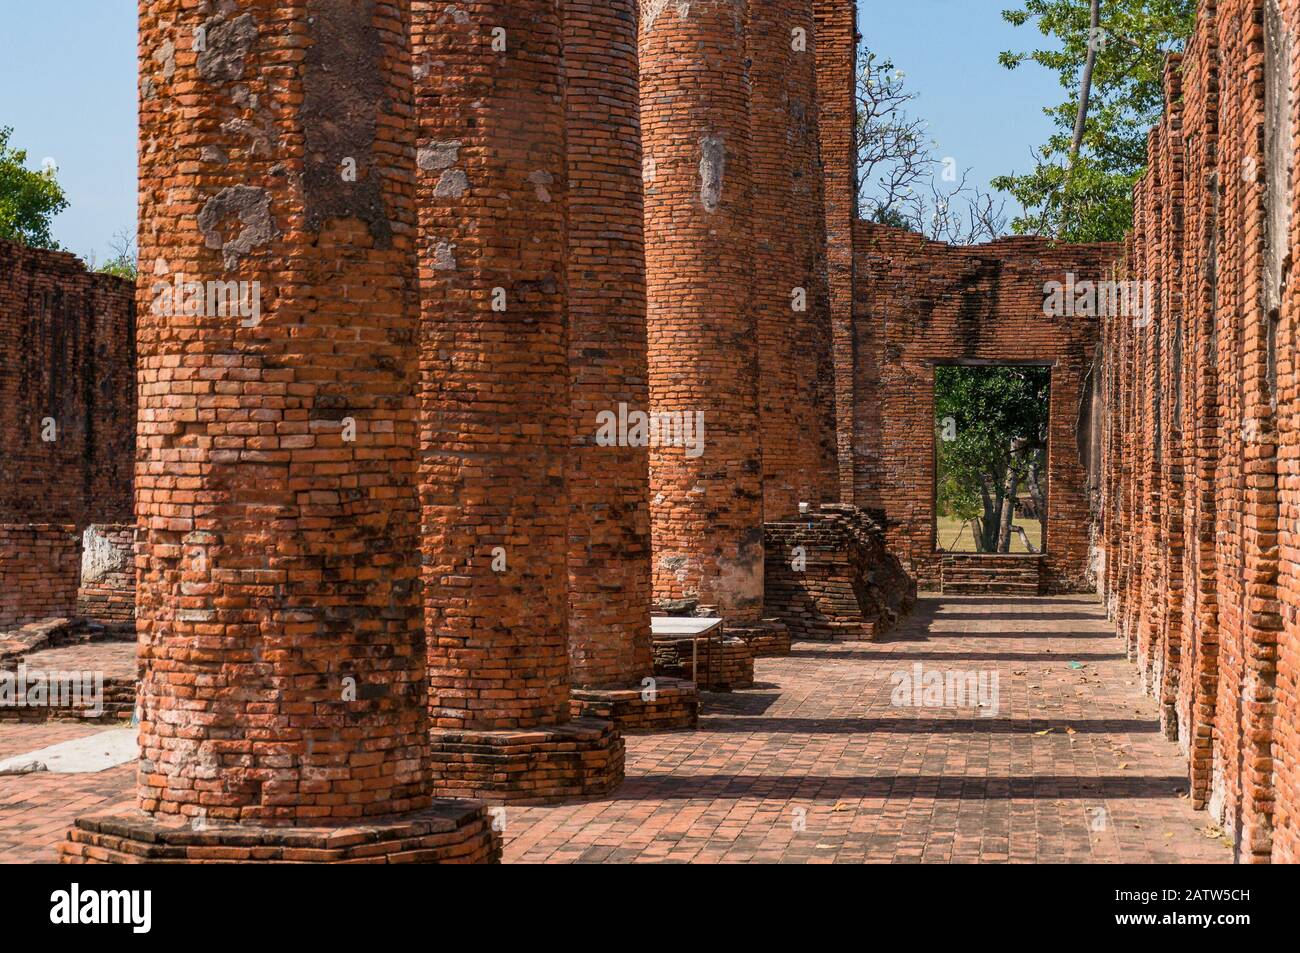 Ancient ruins of Wat Thammikarat temple interrior with old red brick columns. International landmark, travel background Stock Photo